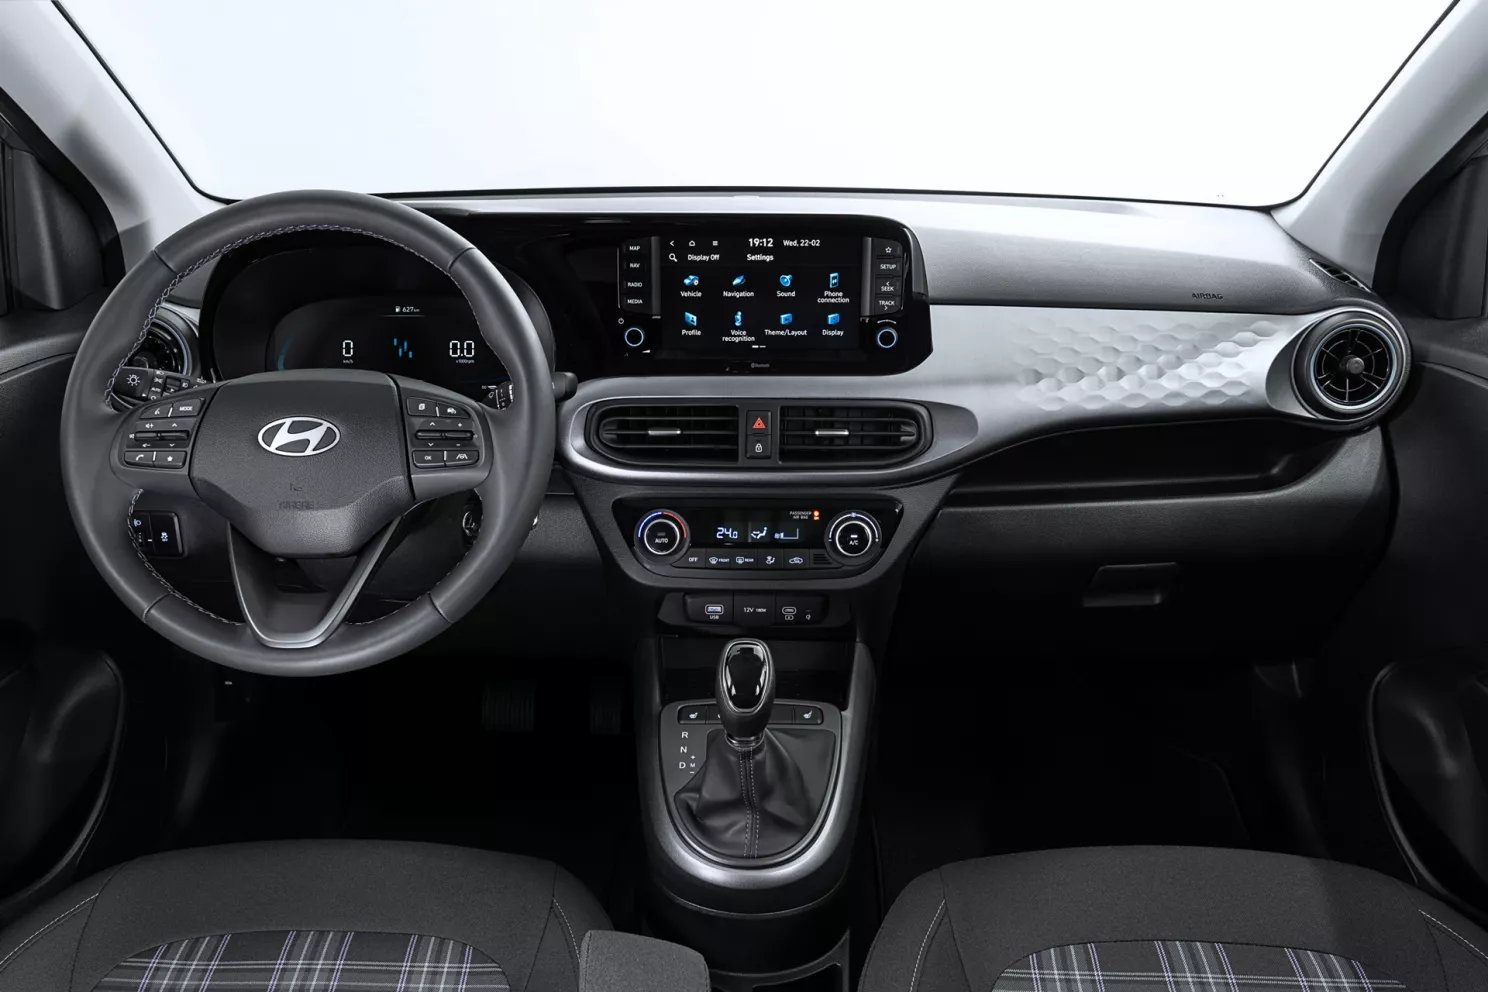 Nový Hyundai i10 - Lenner Motors